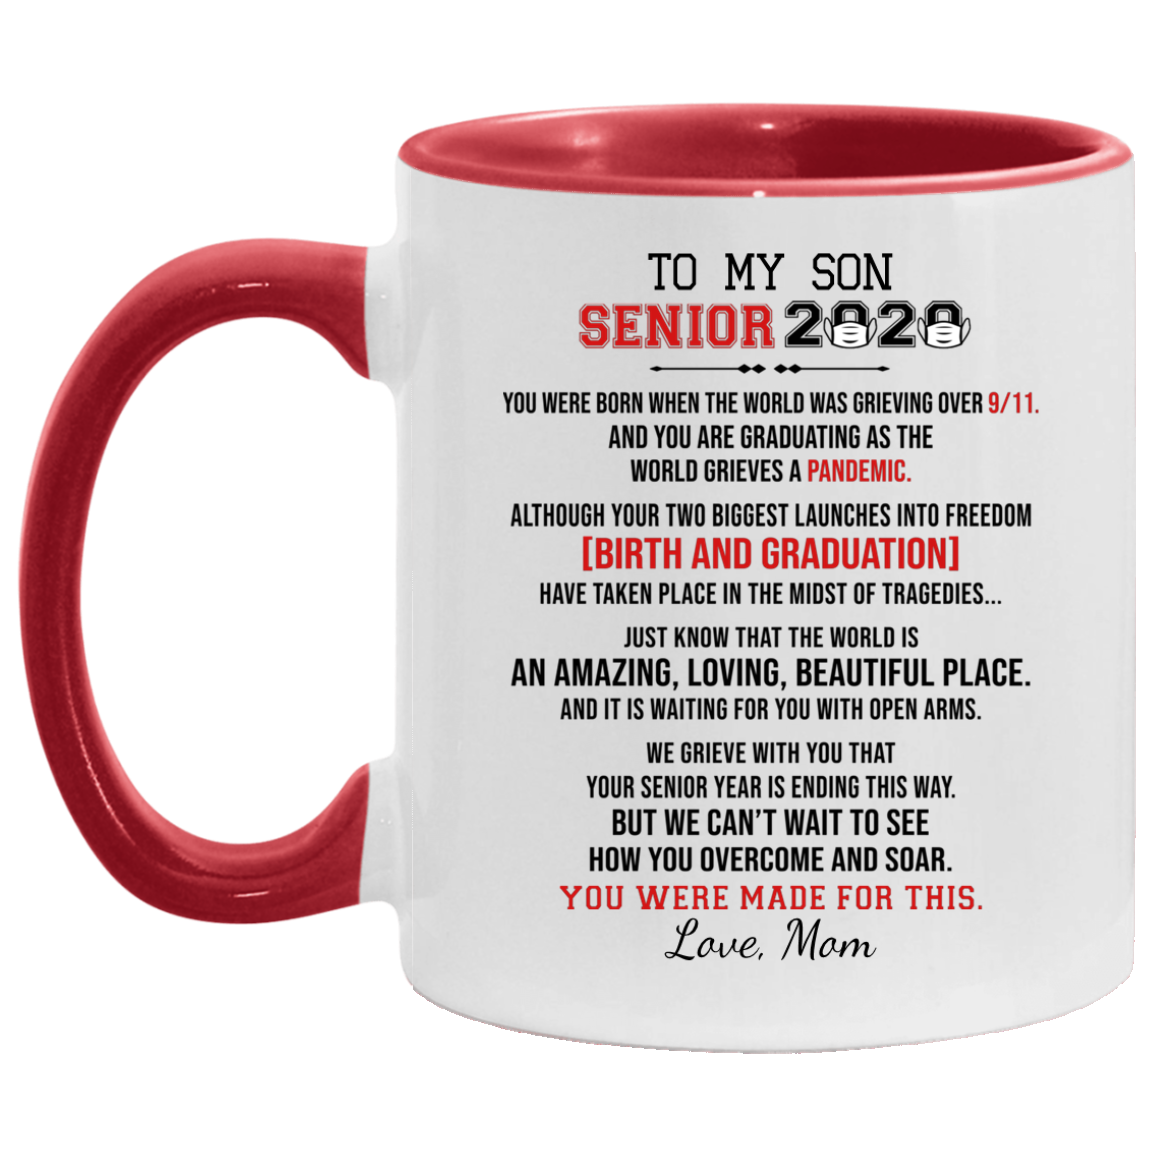 To My Granddaughter Senior 2020 Love Grandma Funny Coffee Mugs Gifts 